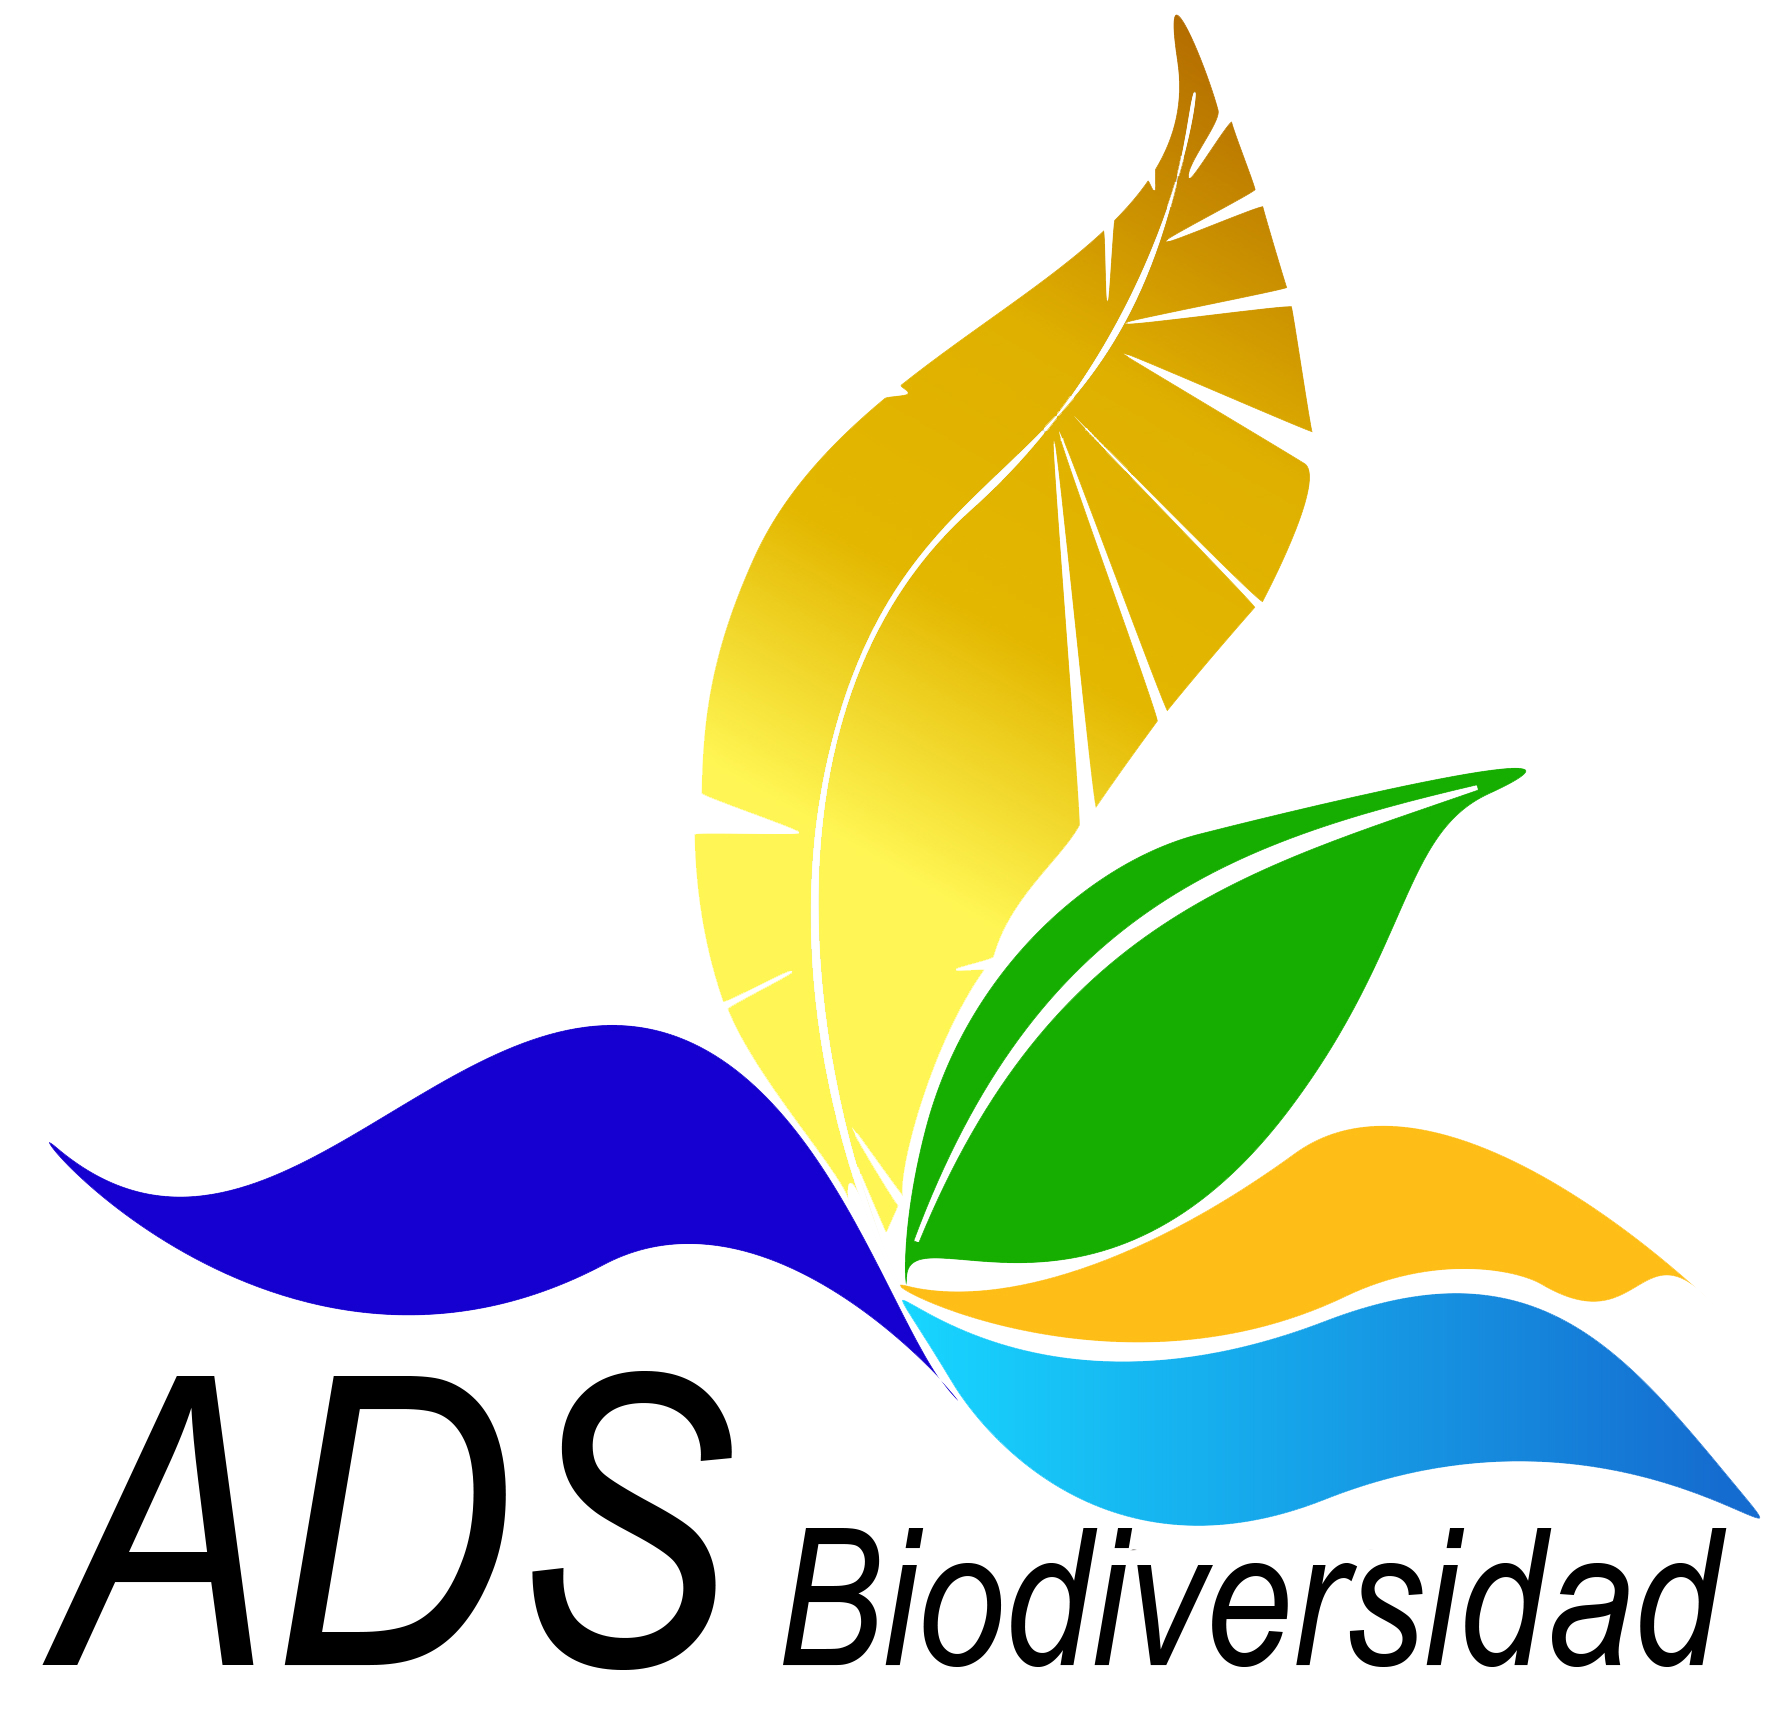 ADS Biodiversidad